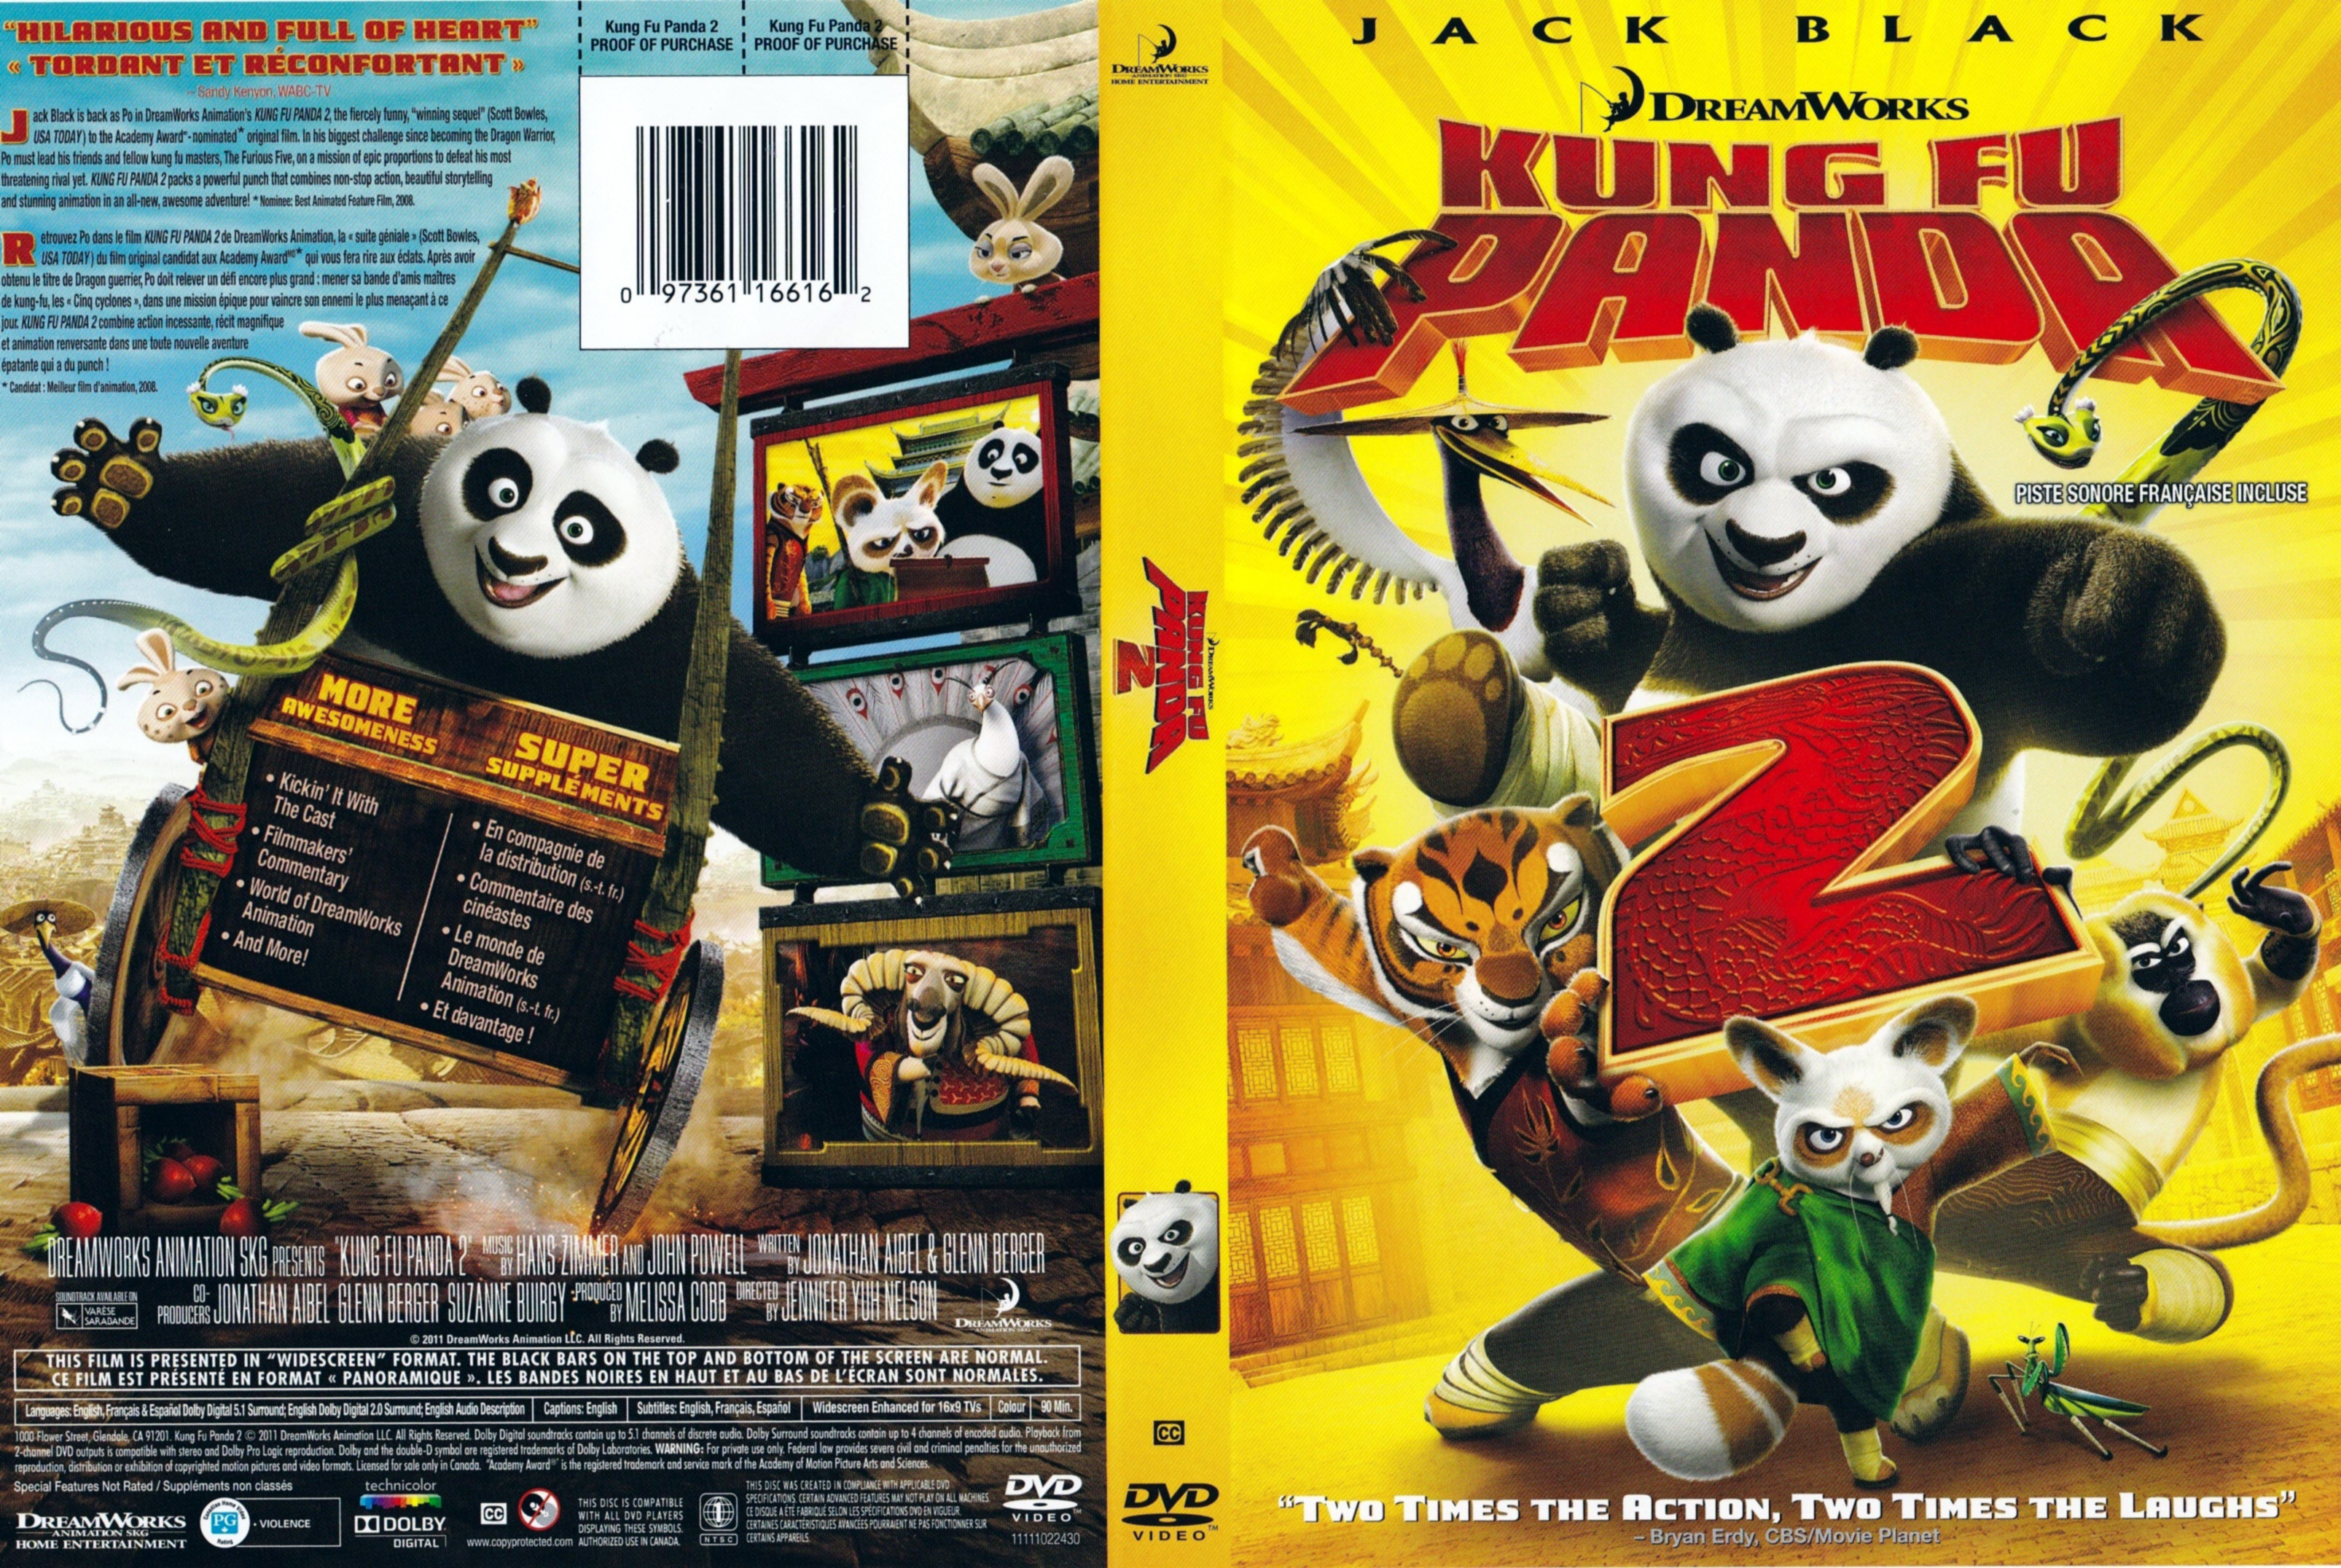 Jaquette DVD Kung fu panda 2 (Canadienne)